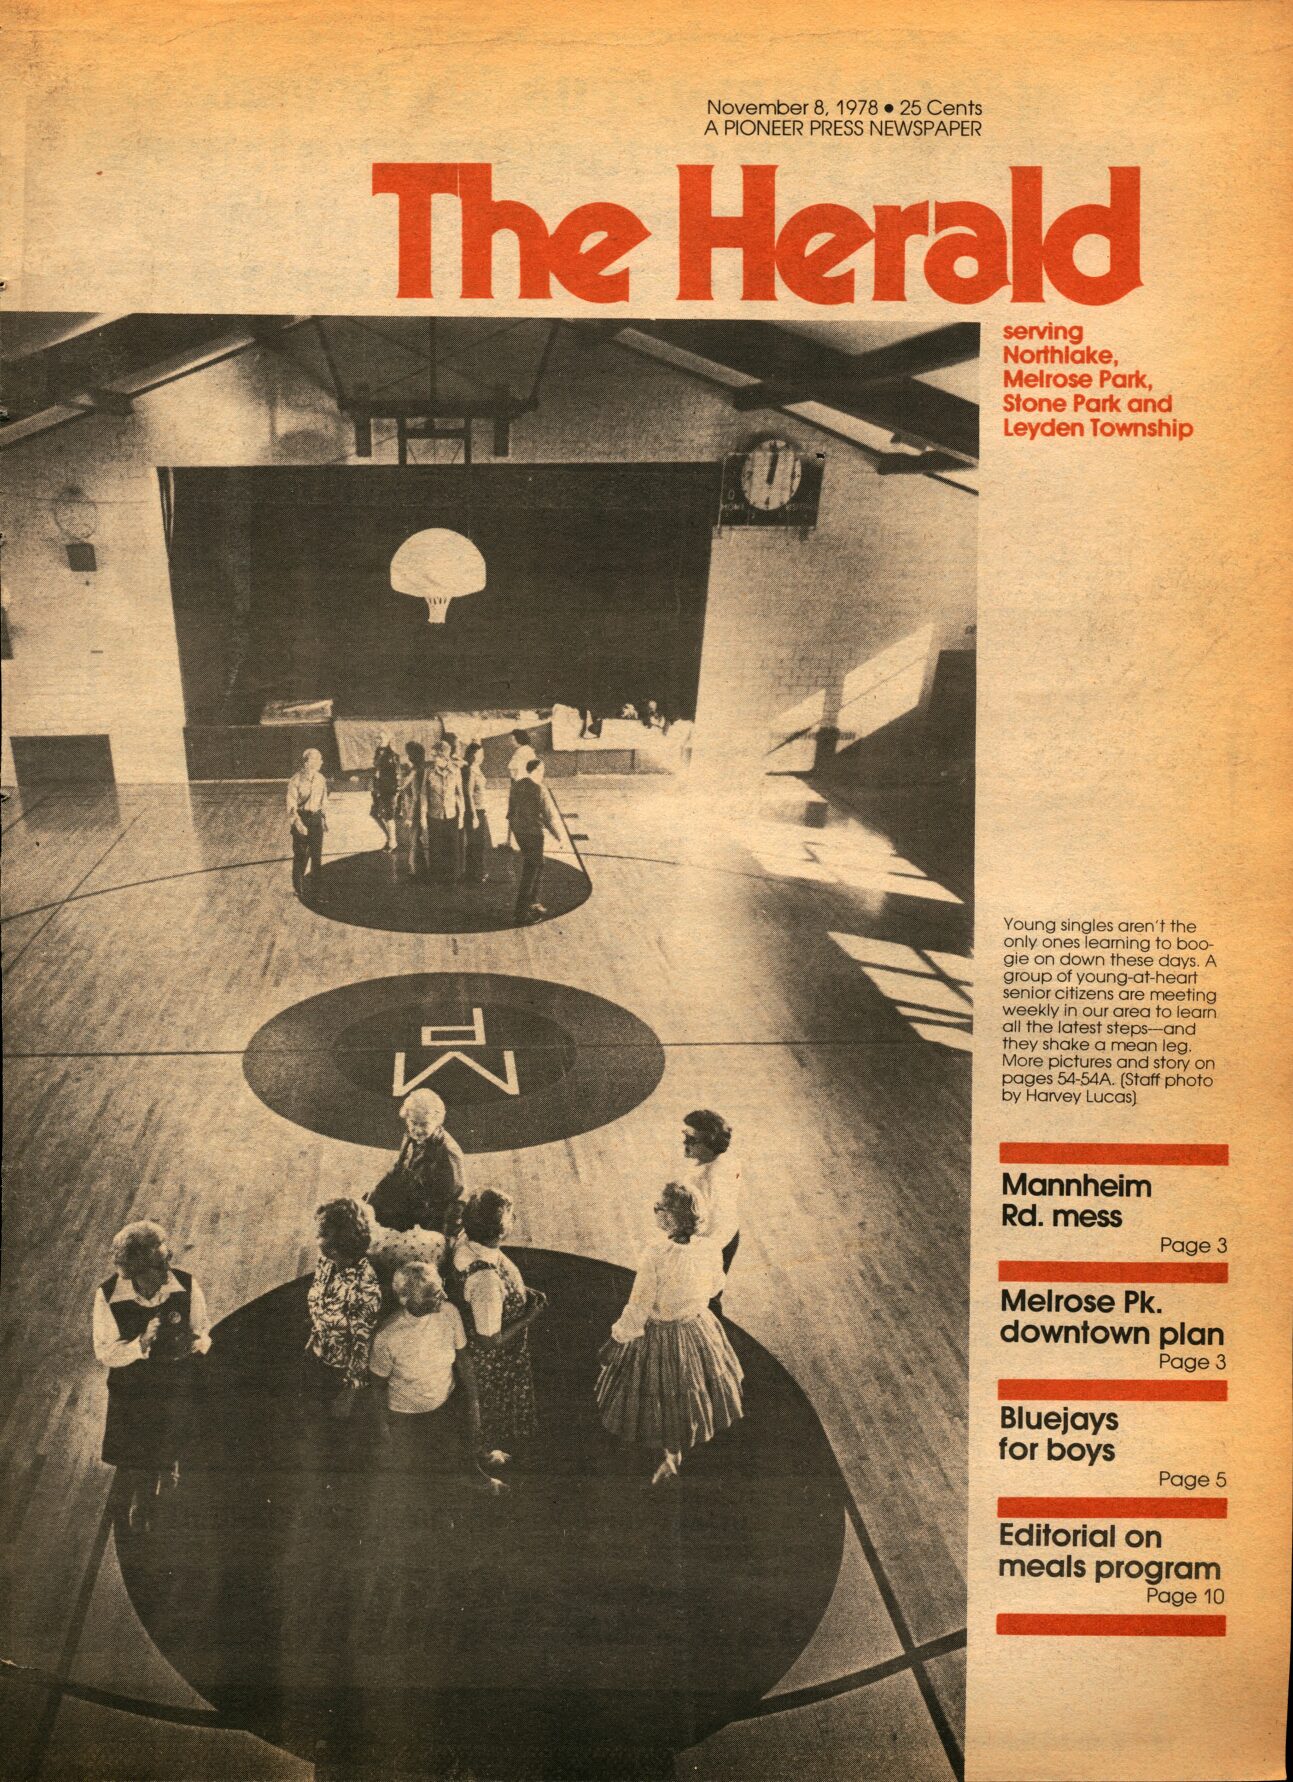 The Herald – 19781108